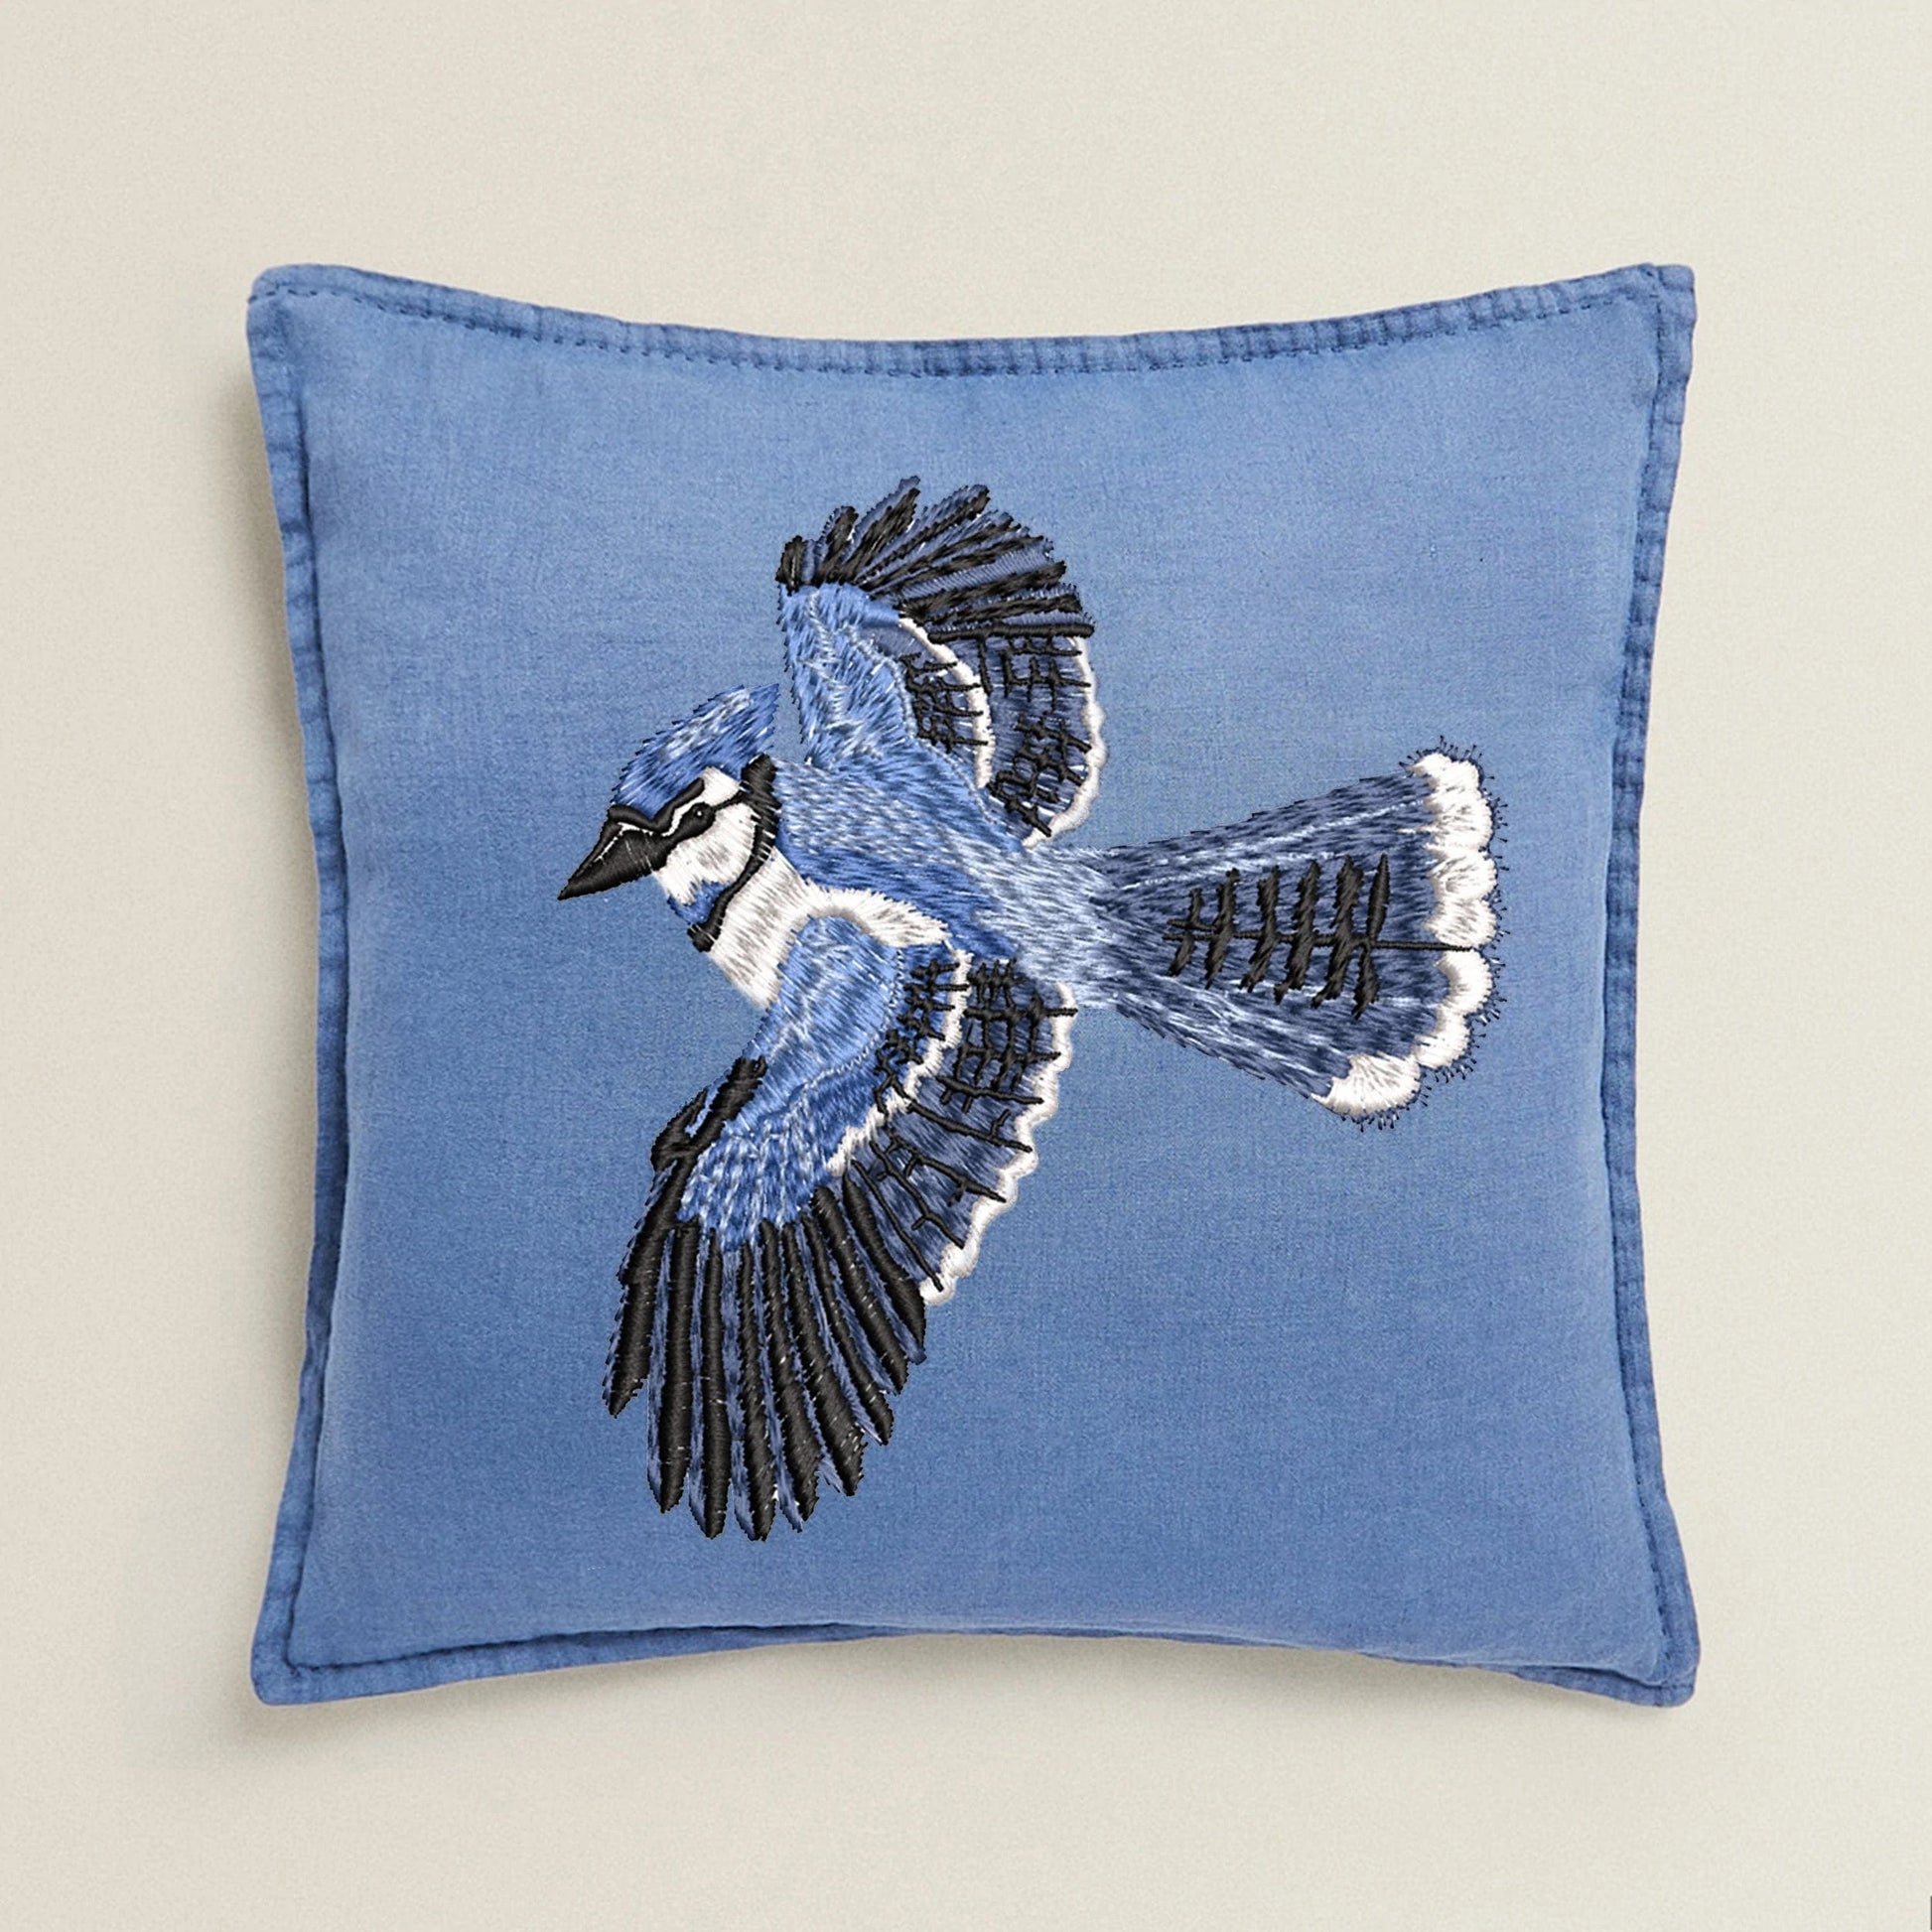 Beautiful Bluebird machine embroidery design on denim pillow